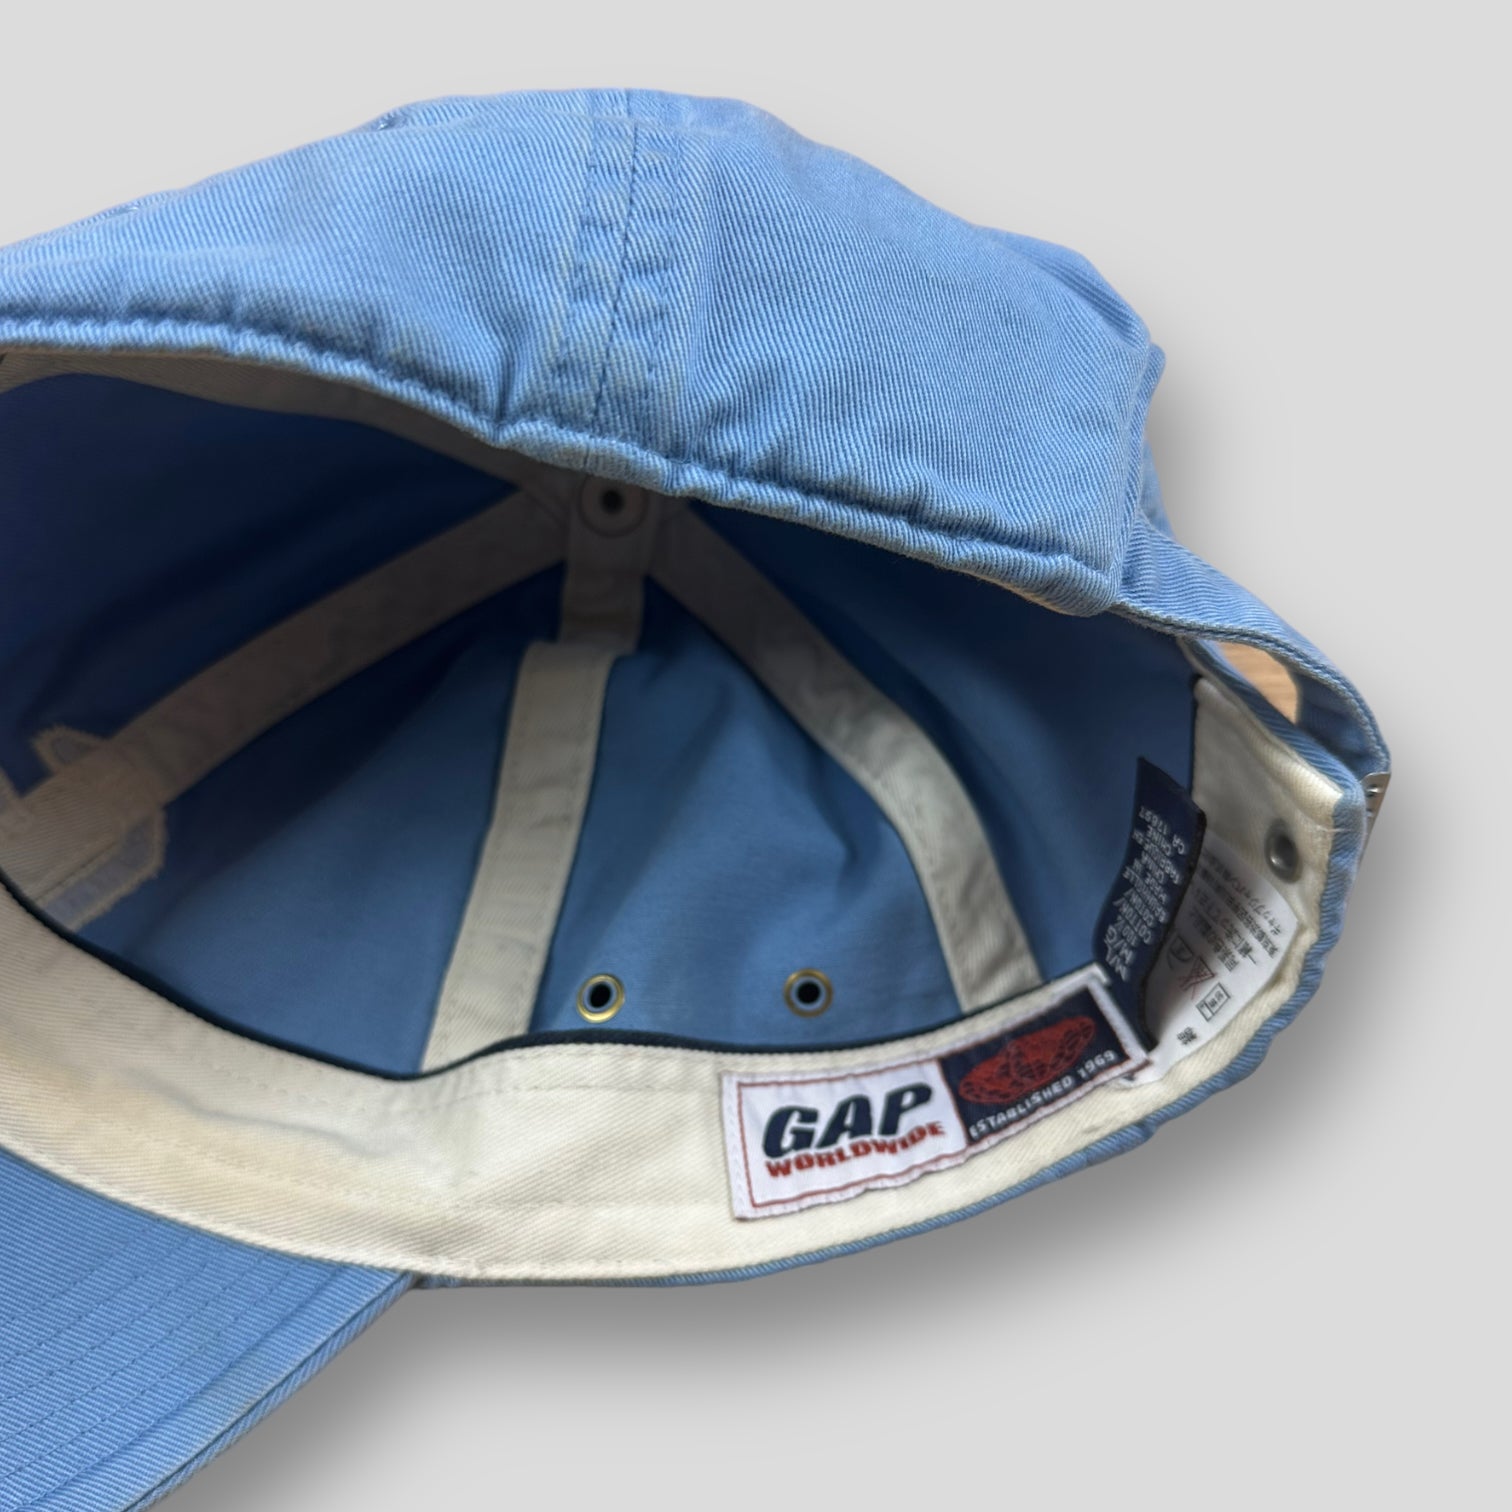 Gap vintage cap